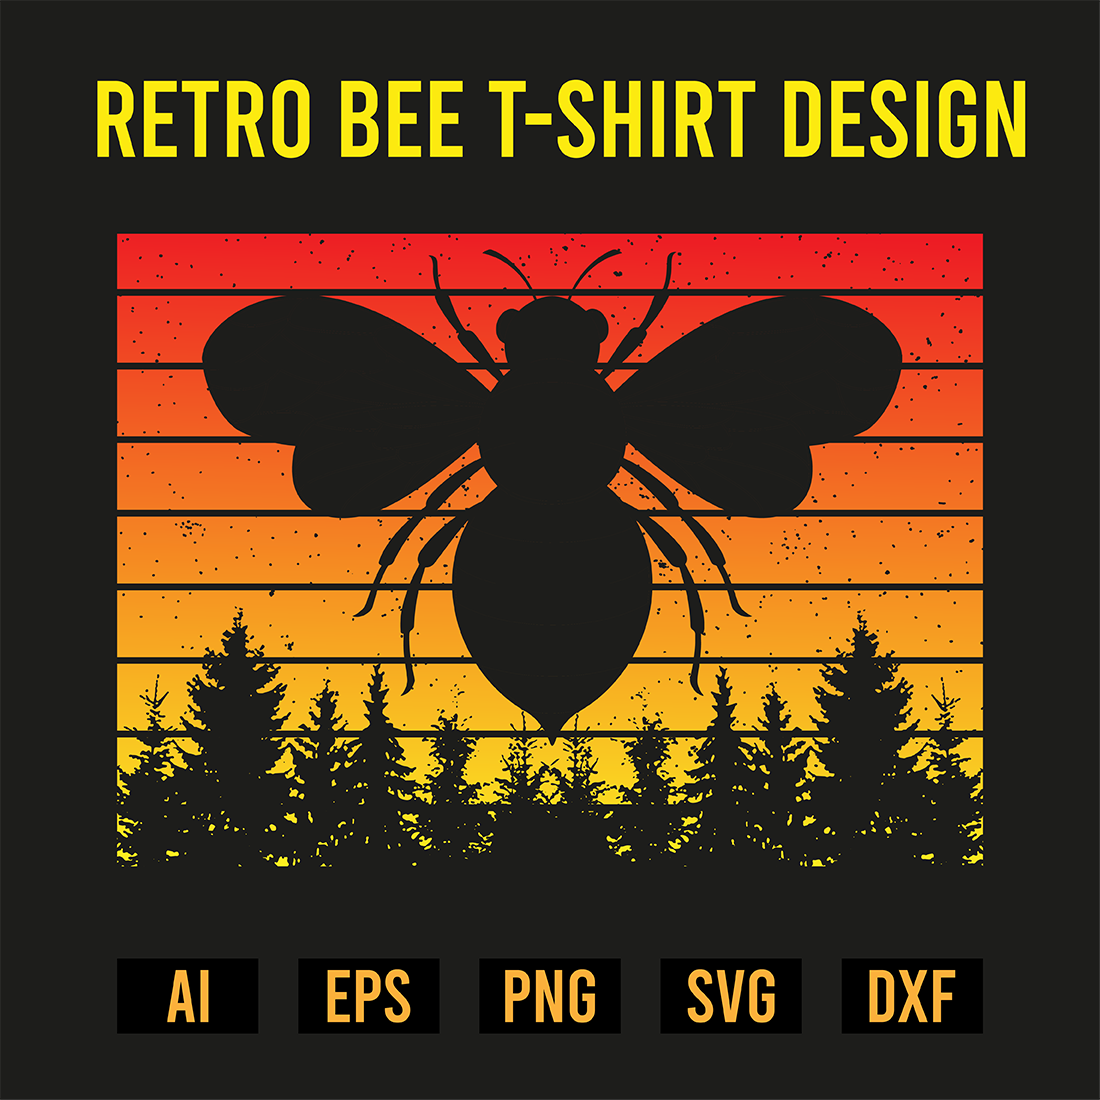 Retro Bee T- Shirt Design cover image.